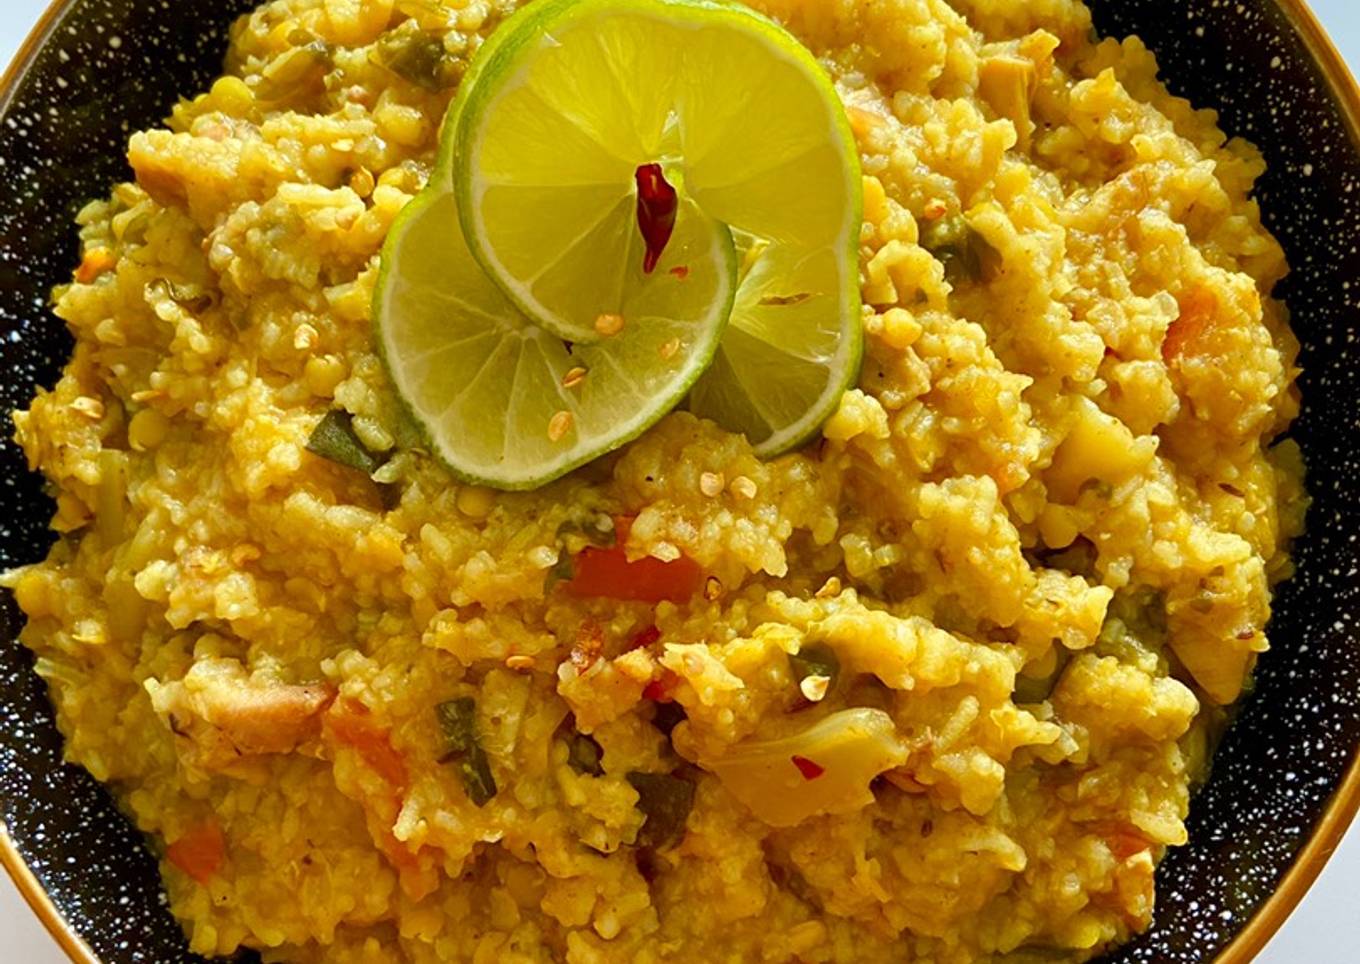 Norom Khichuri (Mushy Rice with lentils & vegetables)
#Ramadan